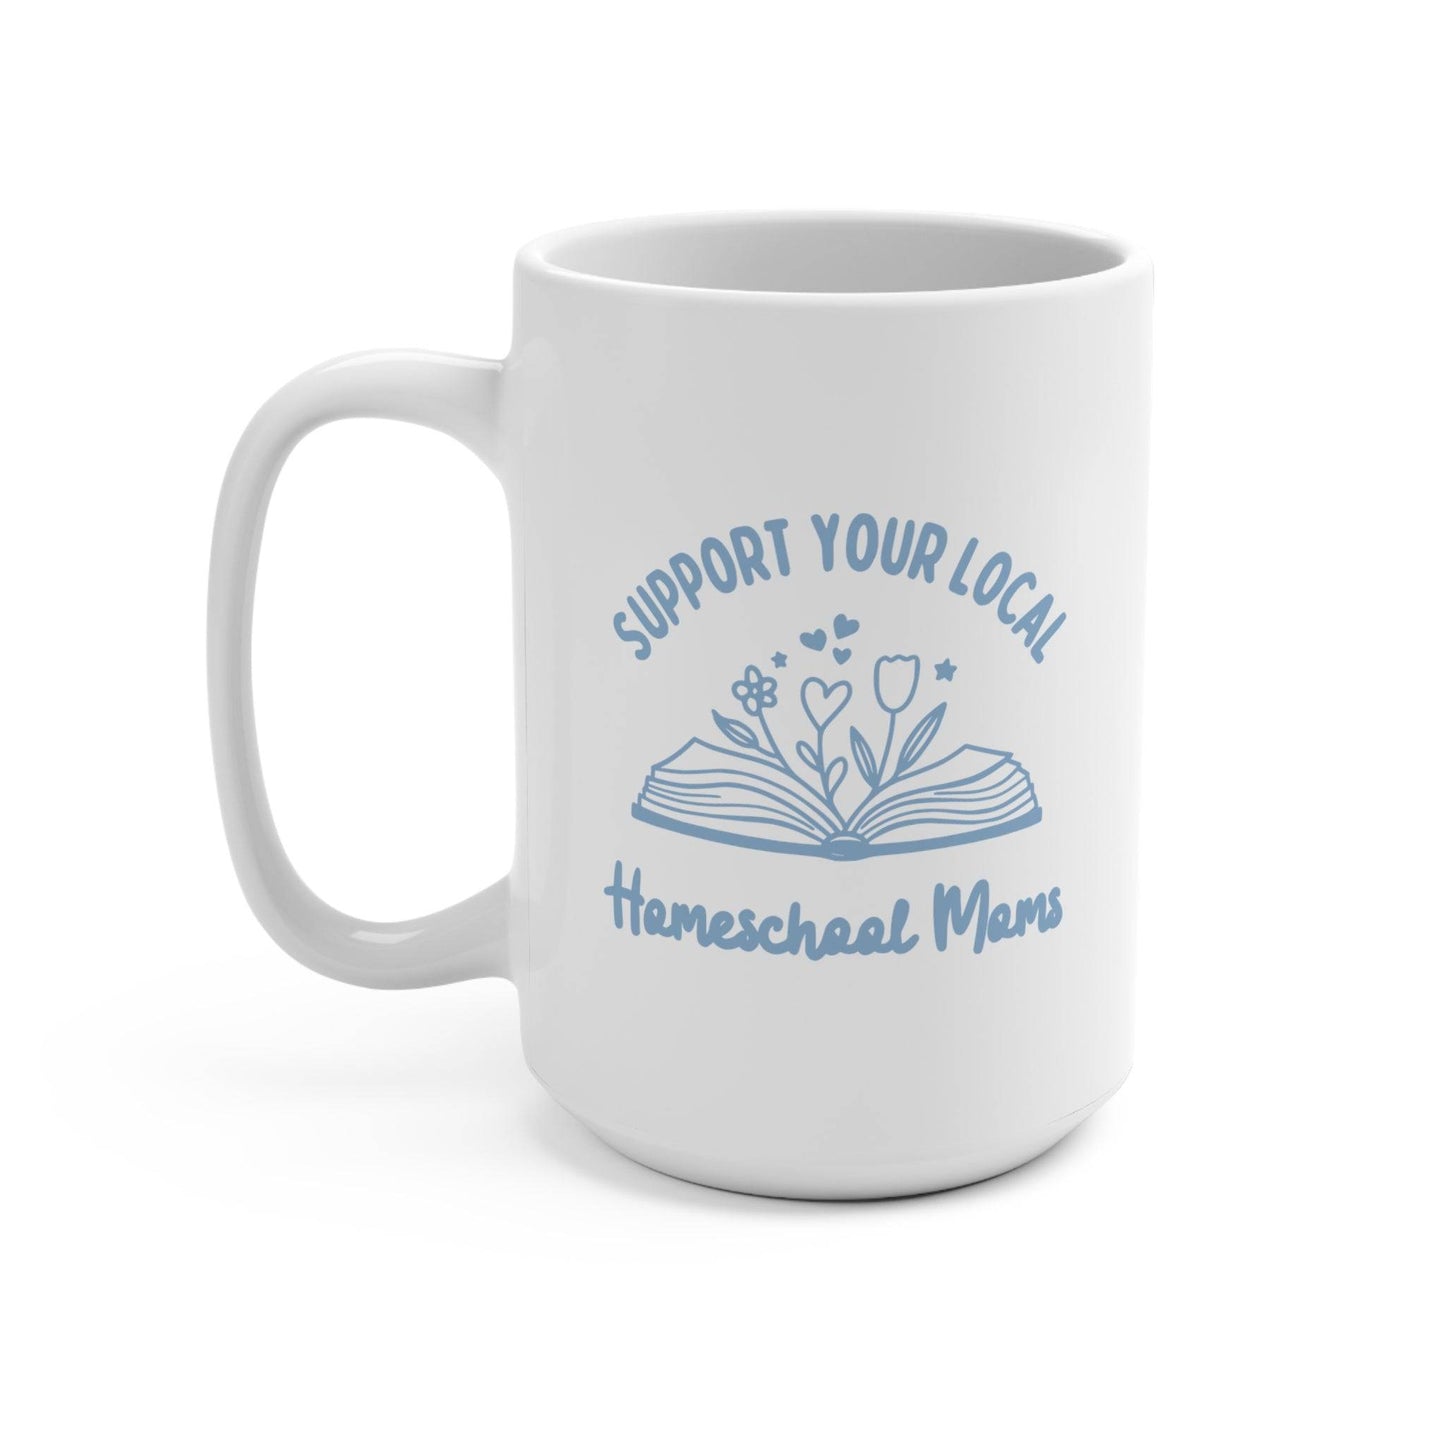 Support Your Local Homeschool Moms Mug 15oz